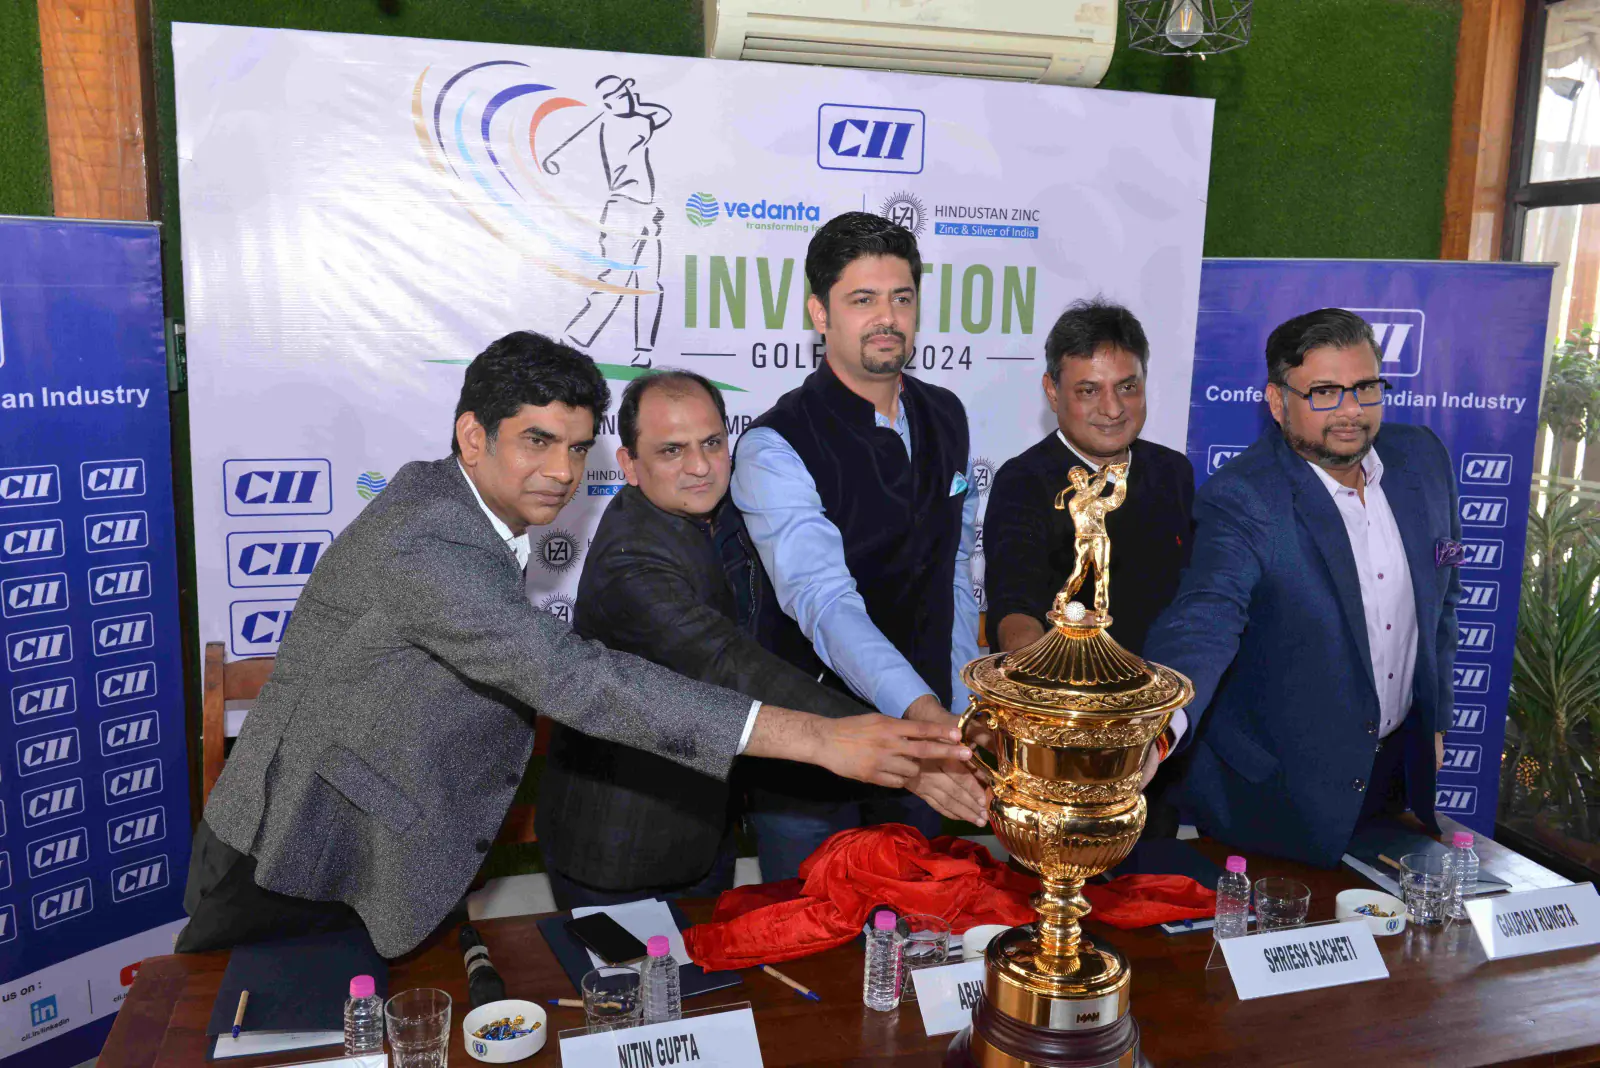 CII-VEDANTA HINDUSTAN ZINC LTD INVITATION GOLF CUP ON 28 JANUARY 2024